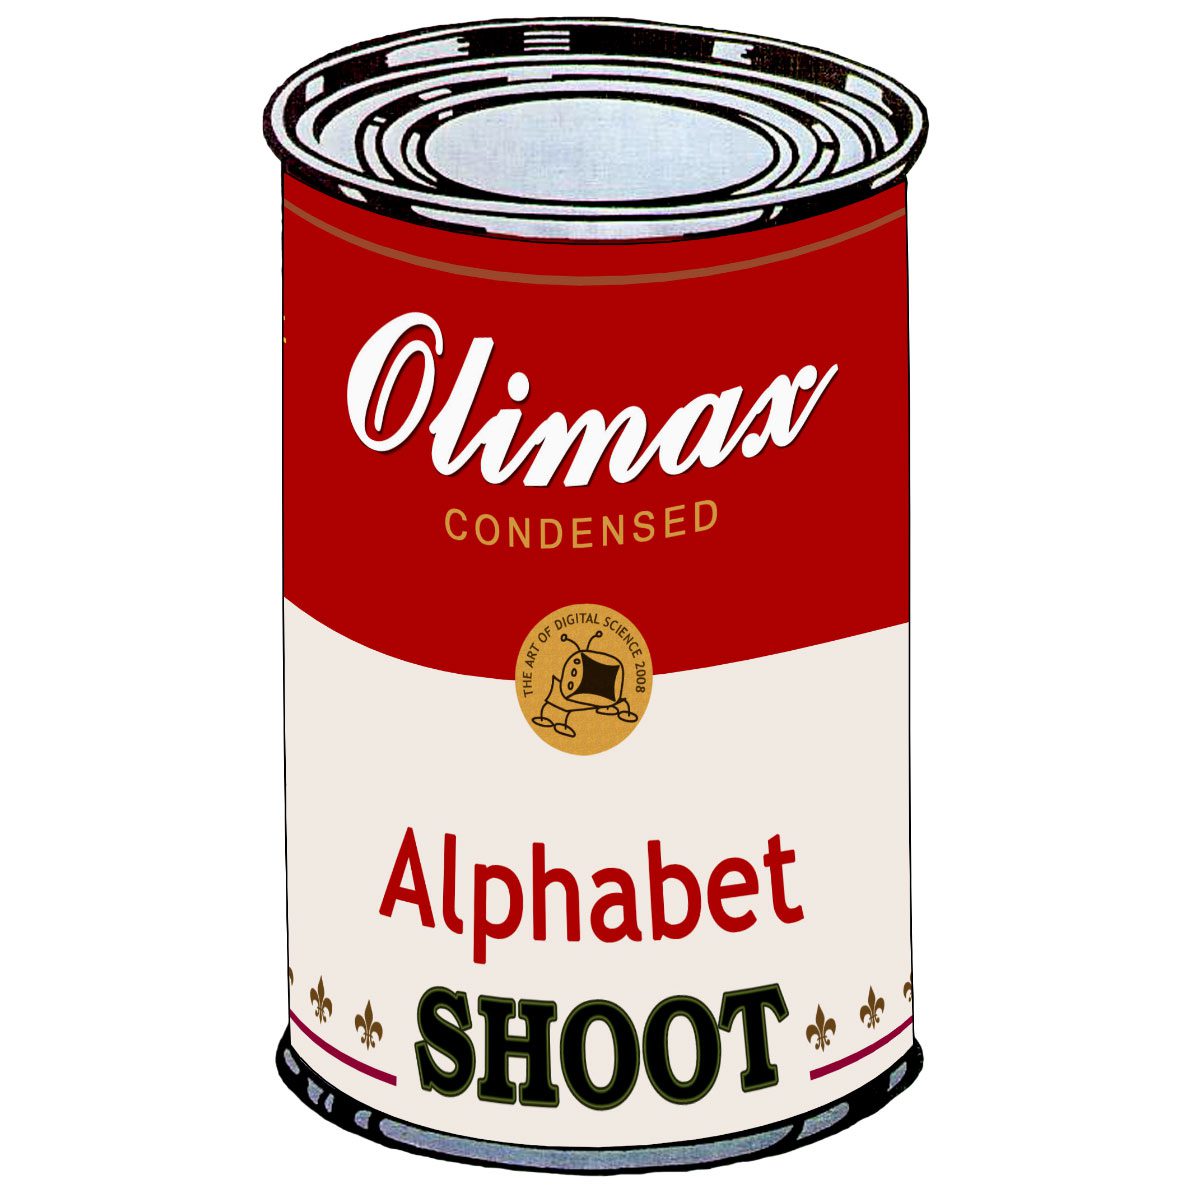 Olimax Alphabet Shoot